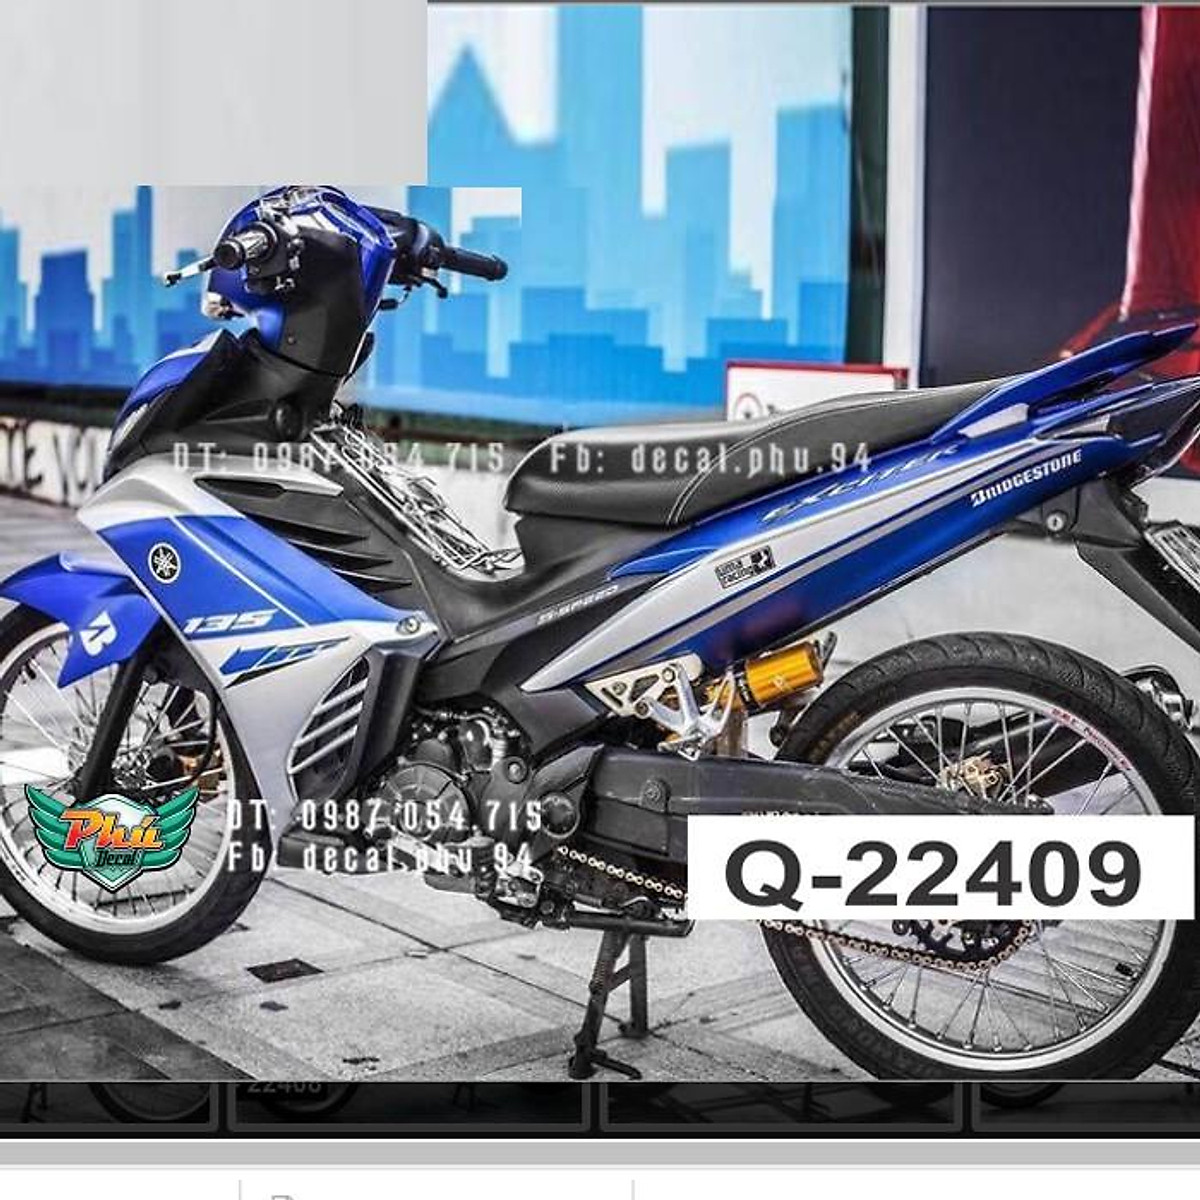 Yamaha Exciter 135 xanh GP Bstp59 Xe đẹp  Chugiongcom